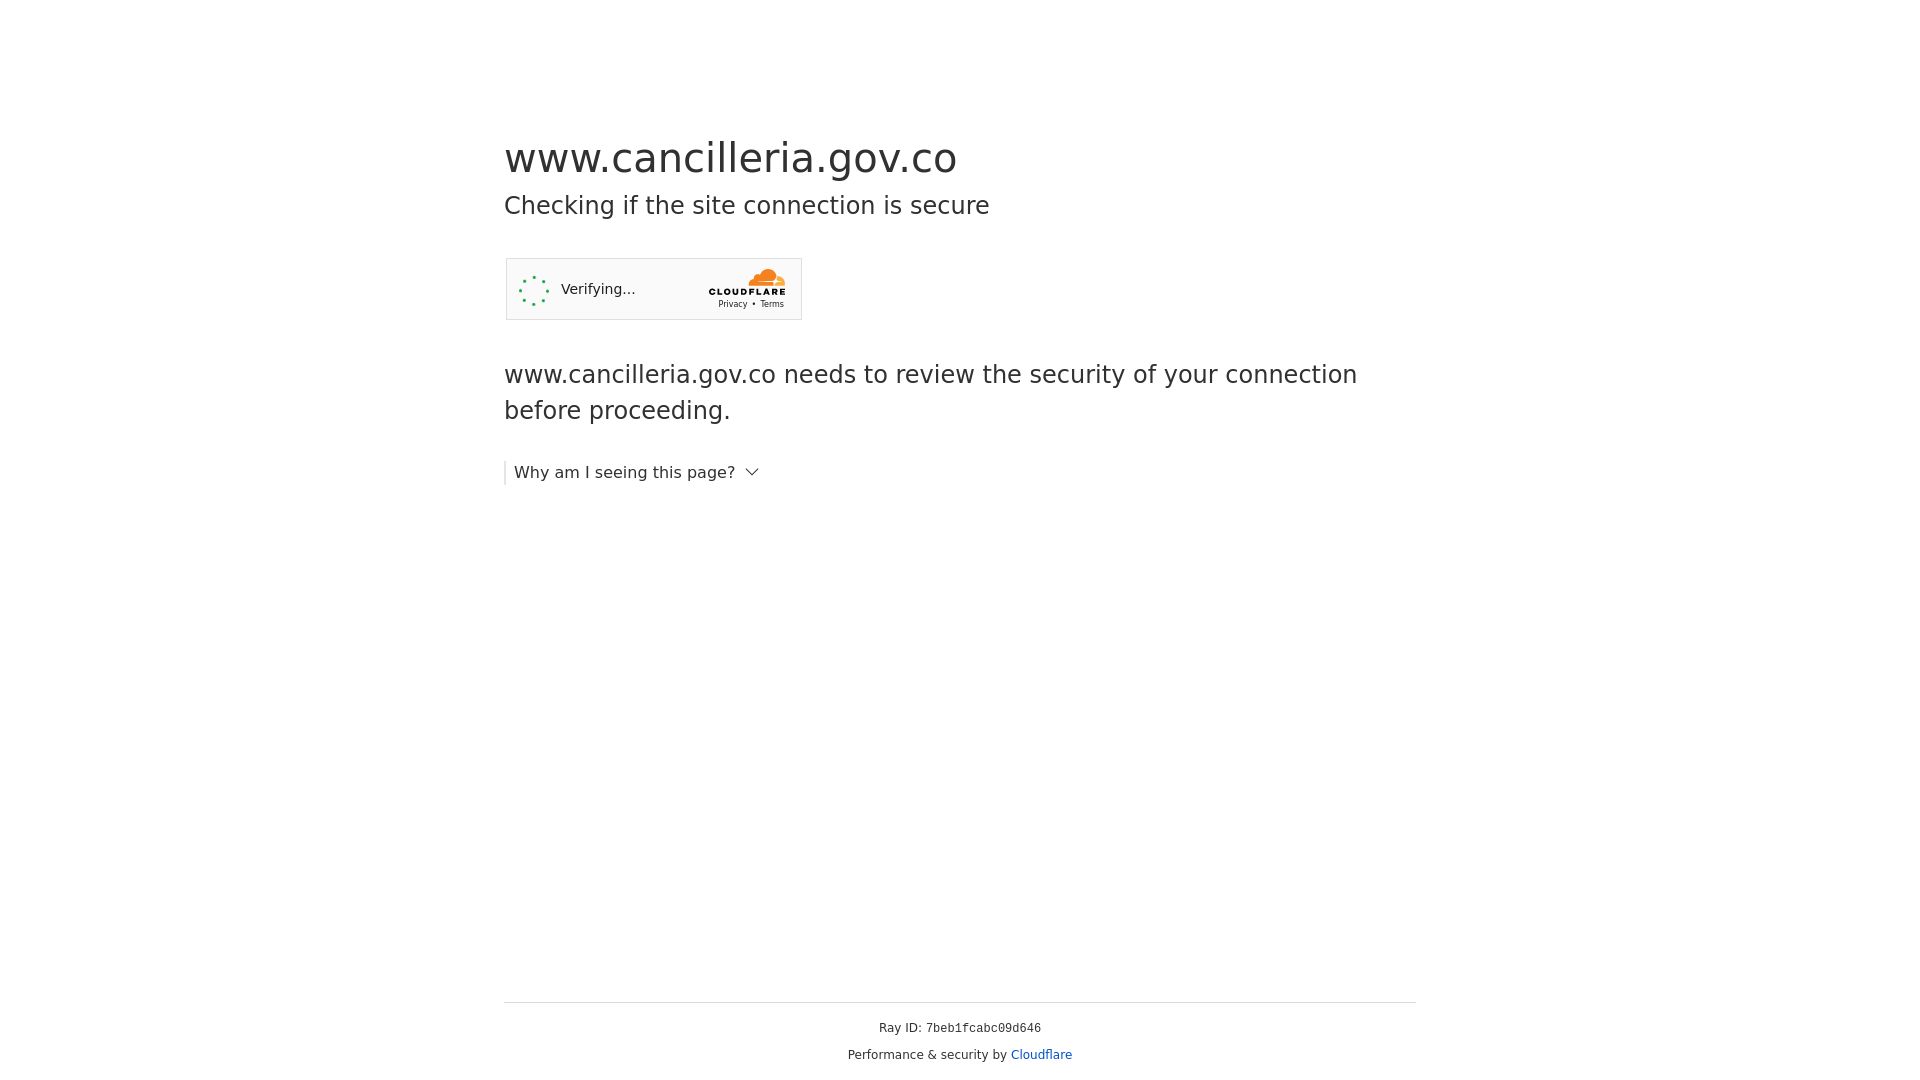 Website status www.cancilleria.gov.co is   ONLINE